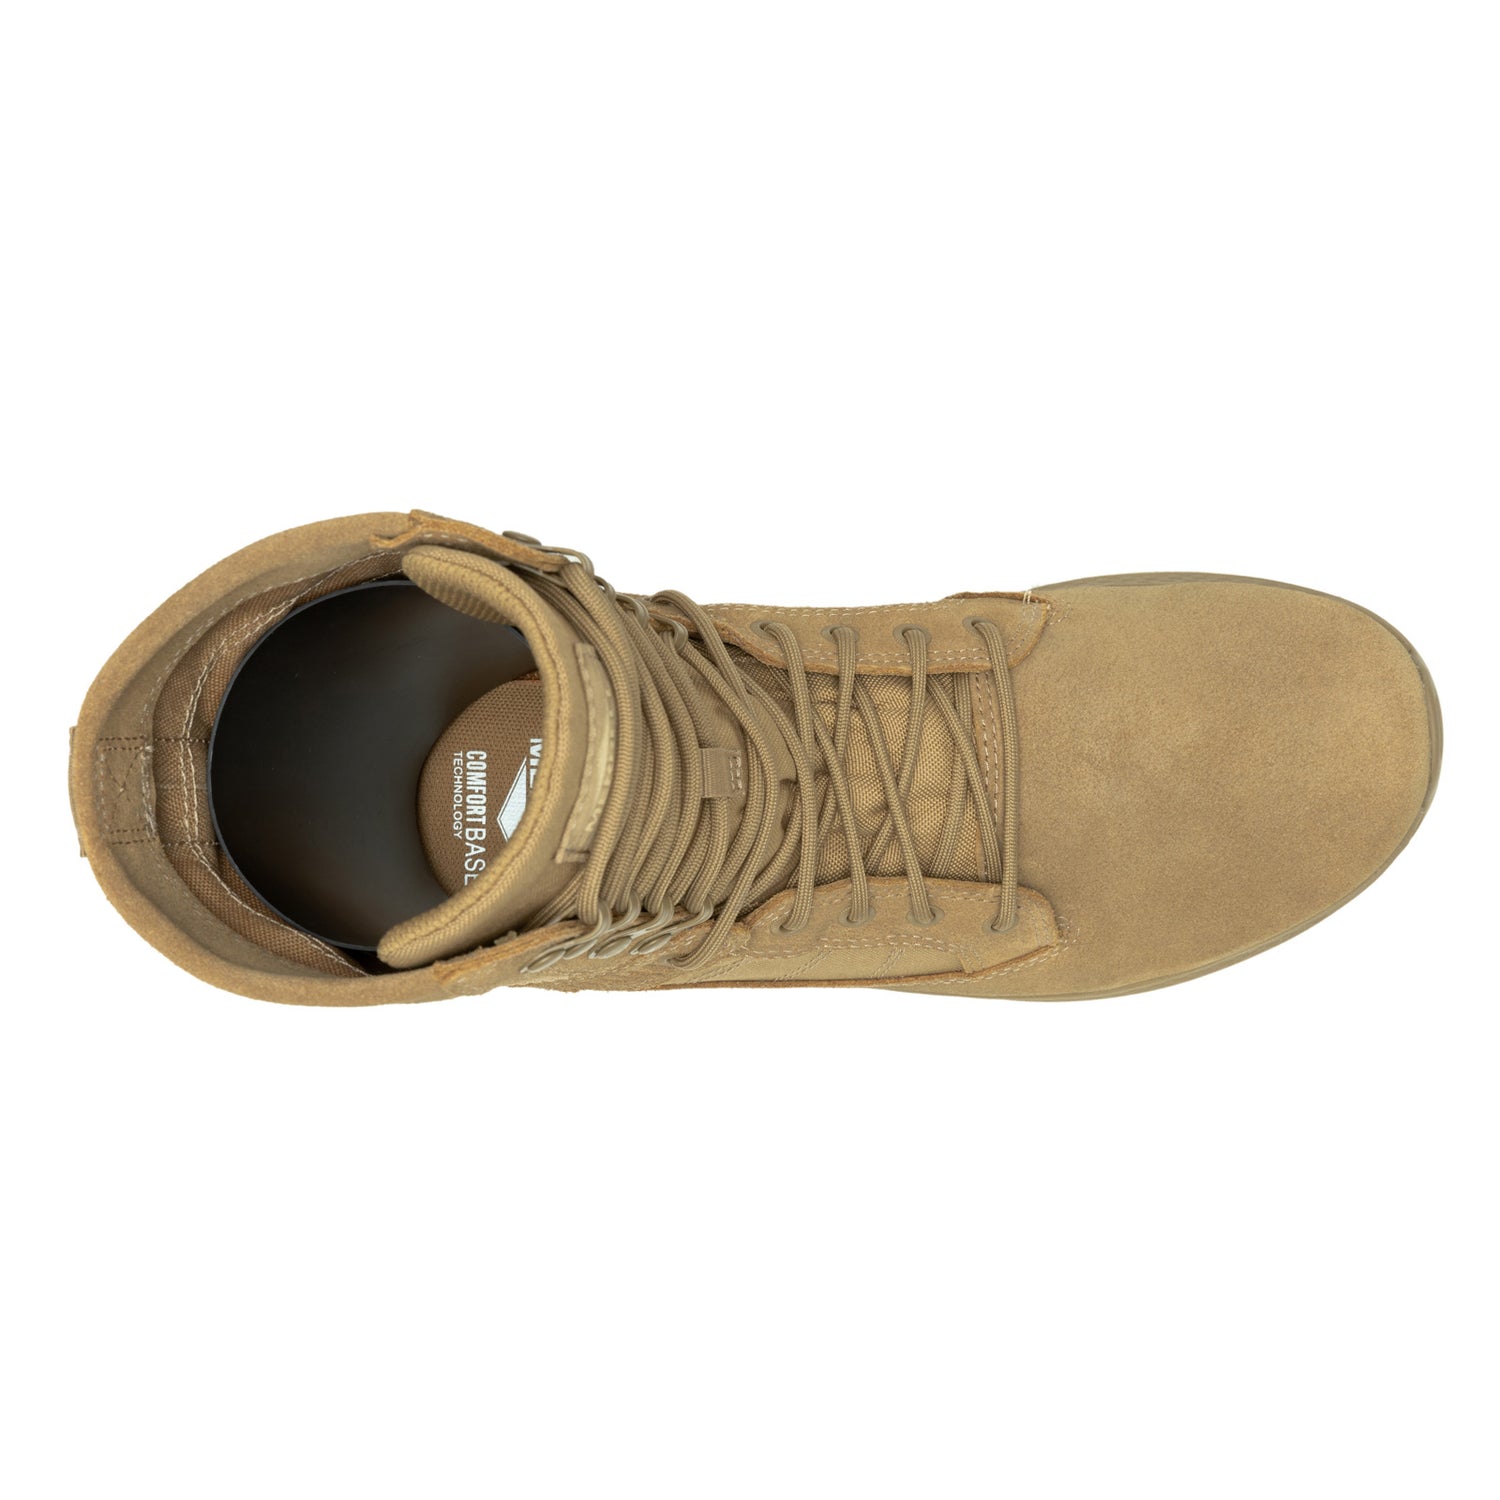 Peltz Shoes  Men's Merrell MQC Force Tactical Composite Toe Waterproof Boot Dark Coyote J005031